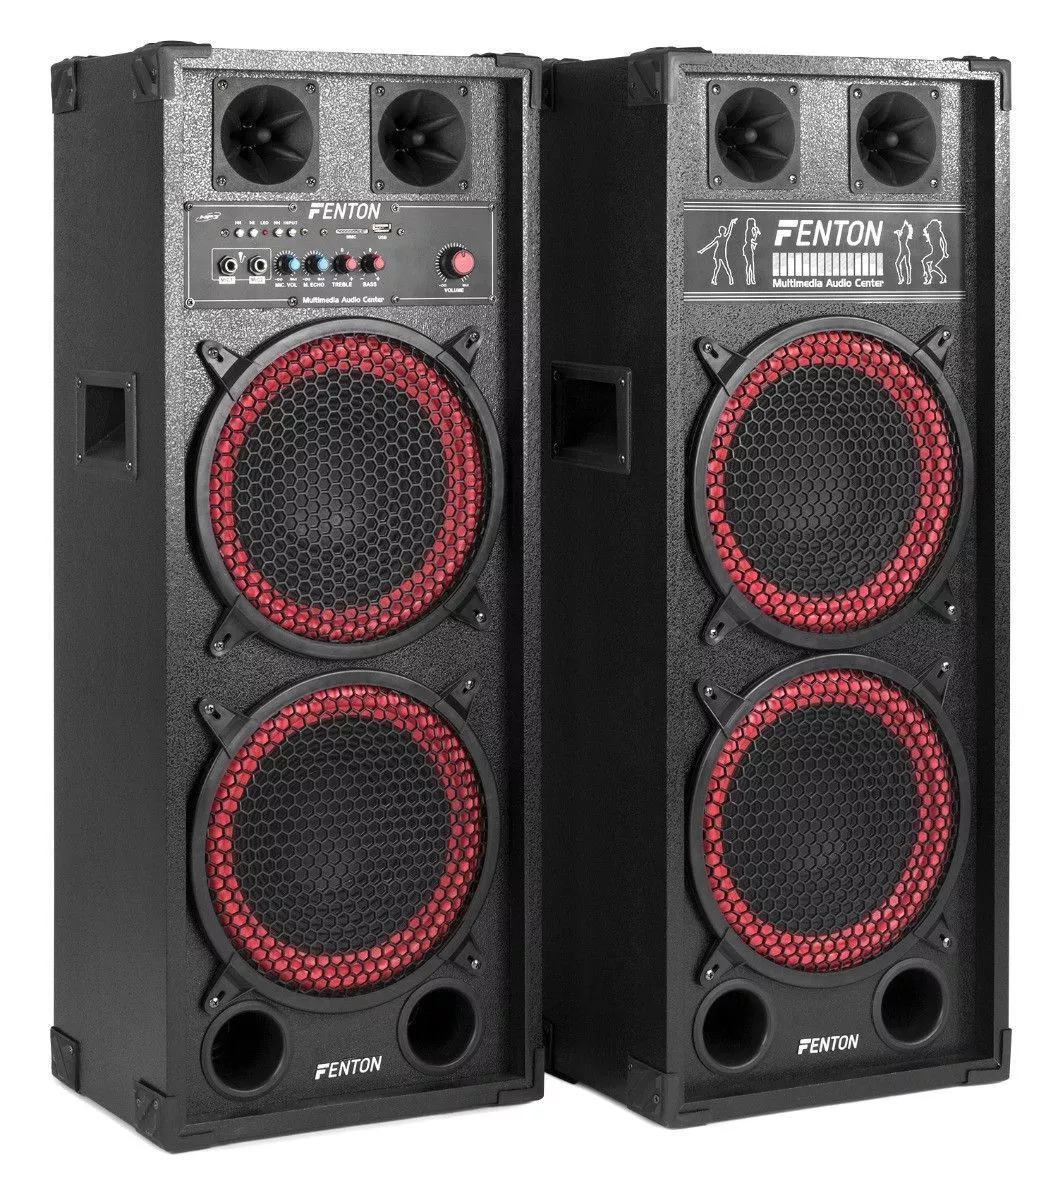 Retourdeal - Fenton SPB-210 Actieve speakerset 2x 10